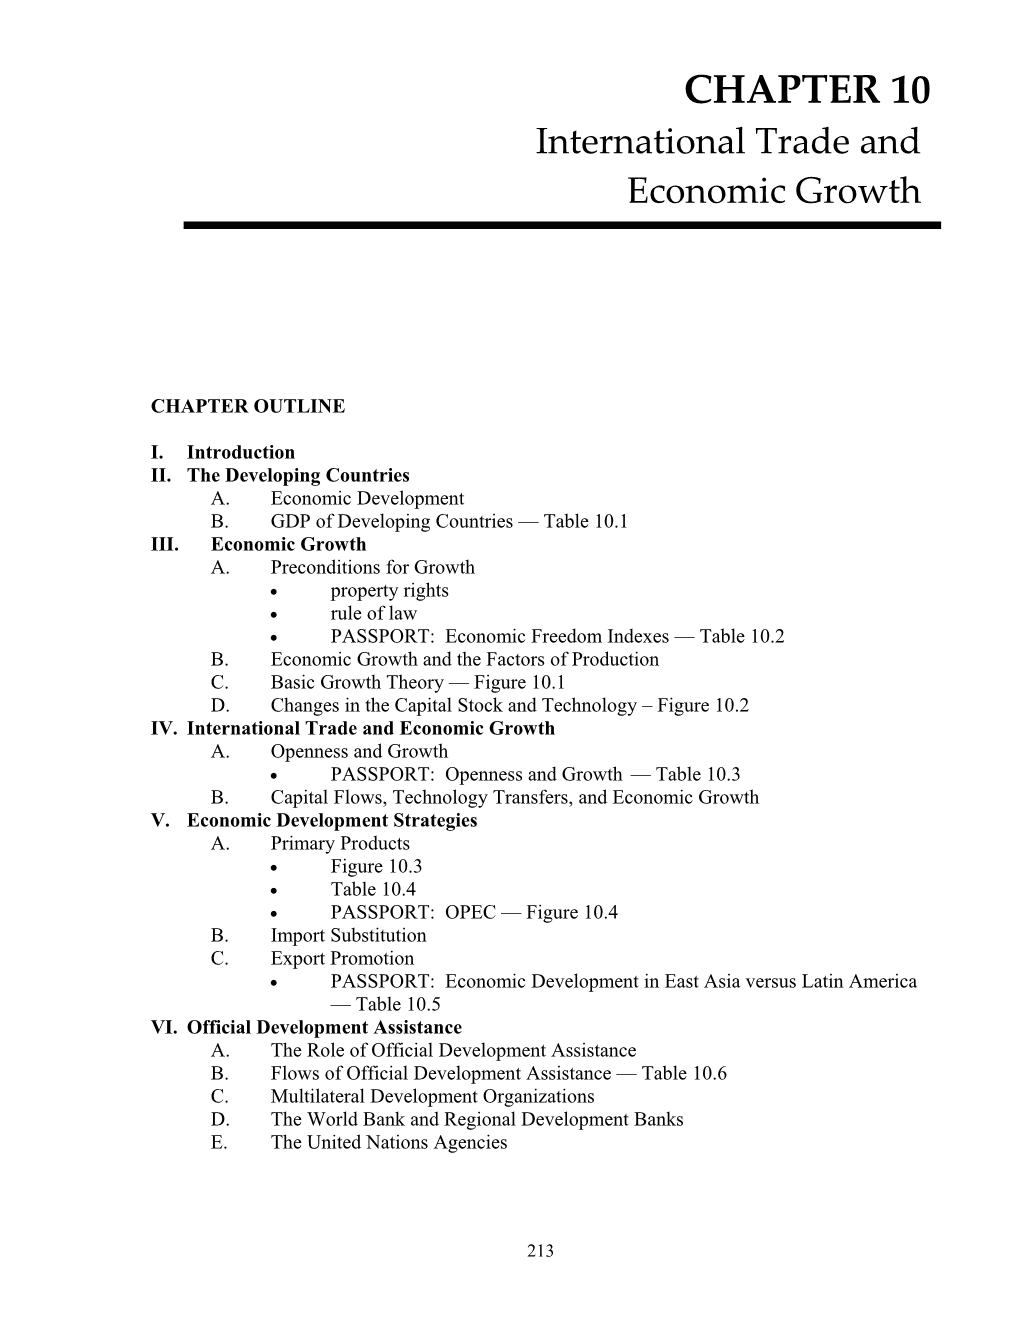 International Trade and Economic Growth 1